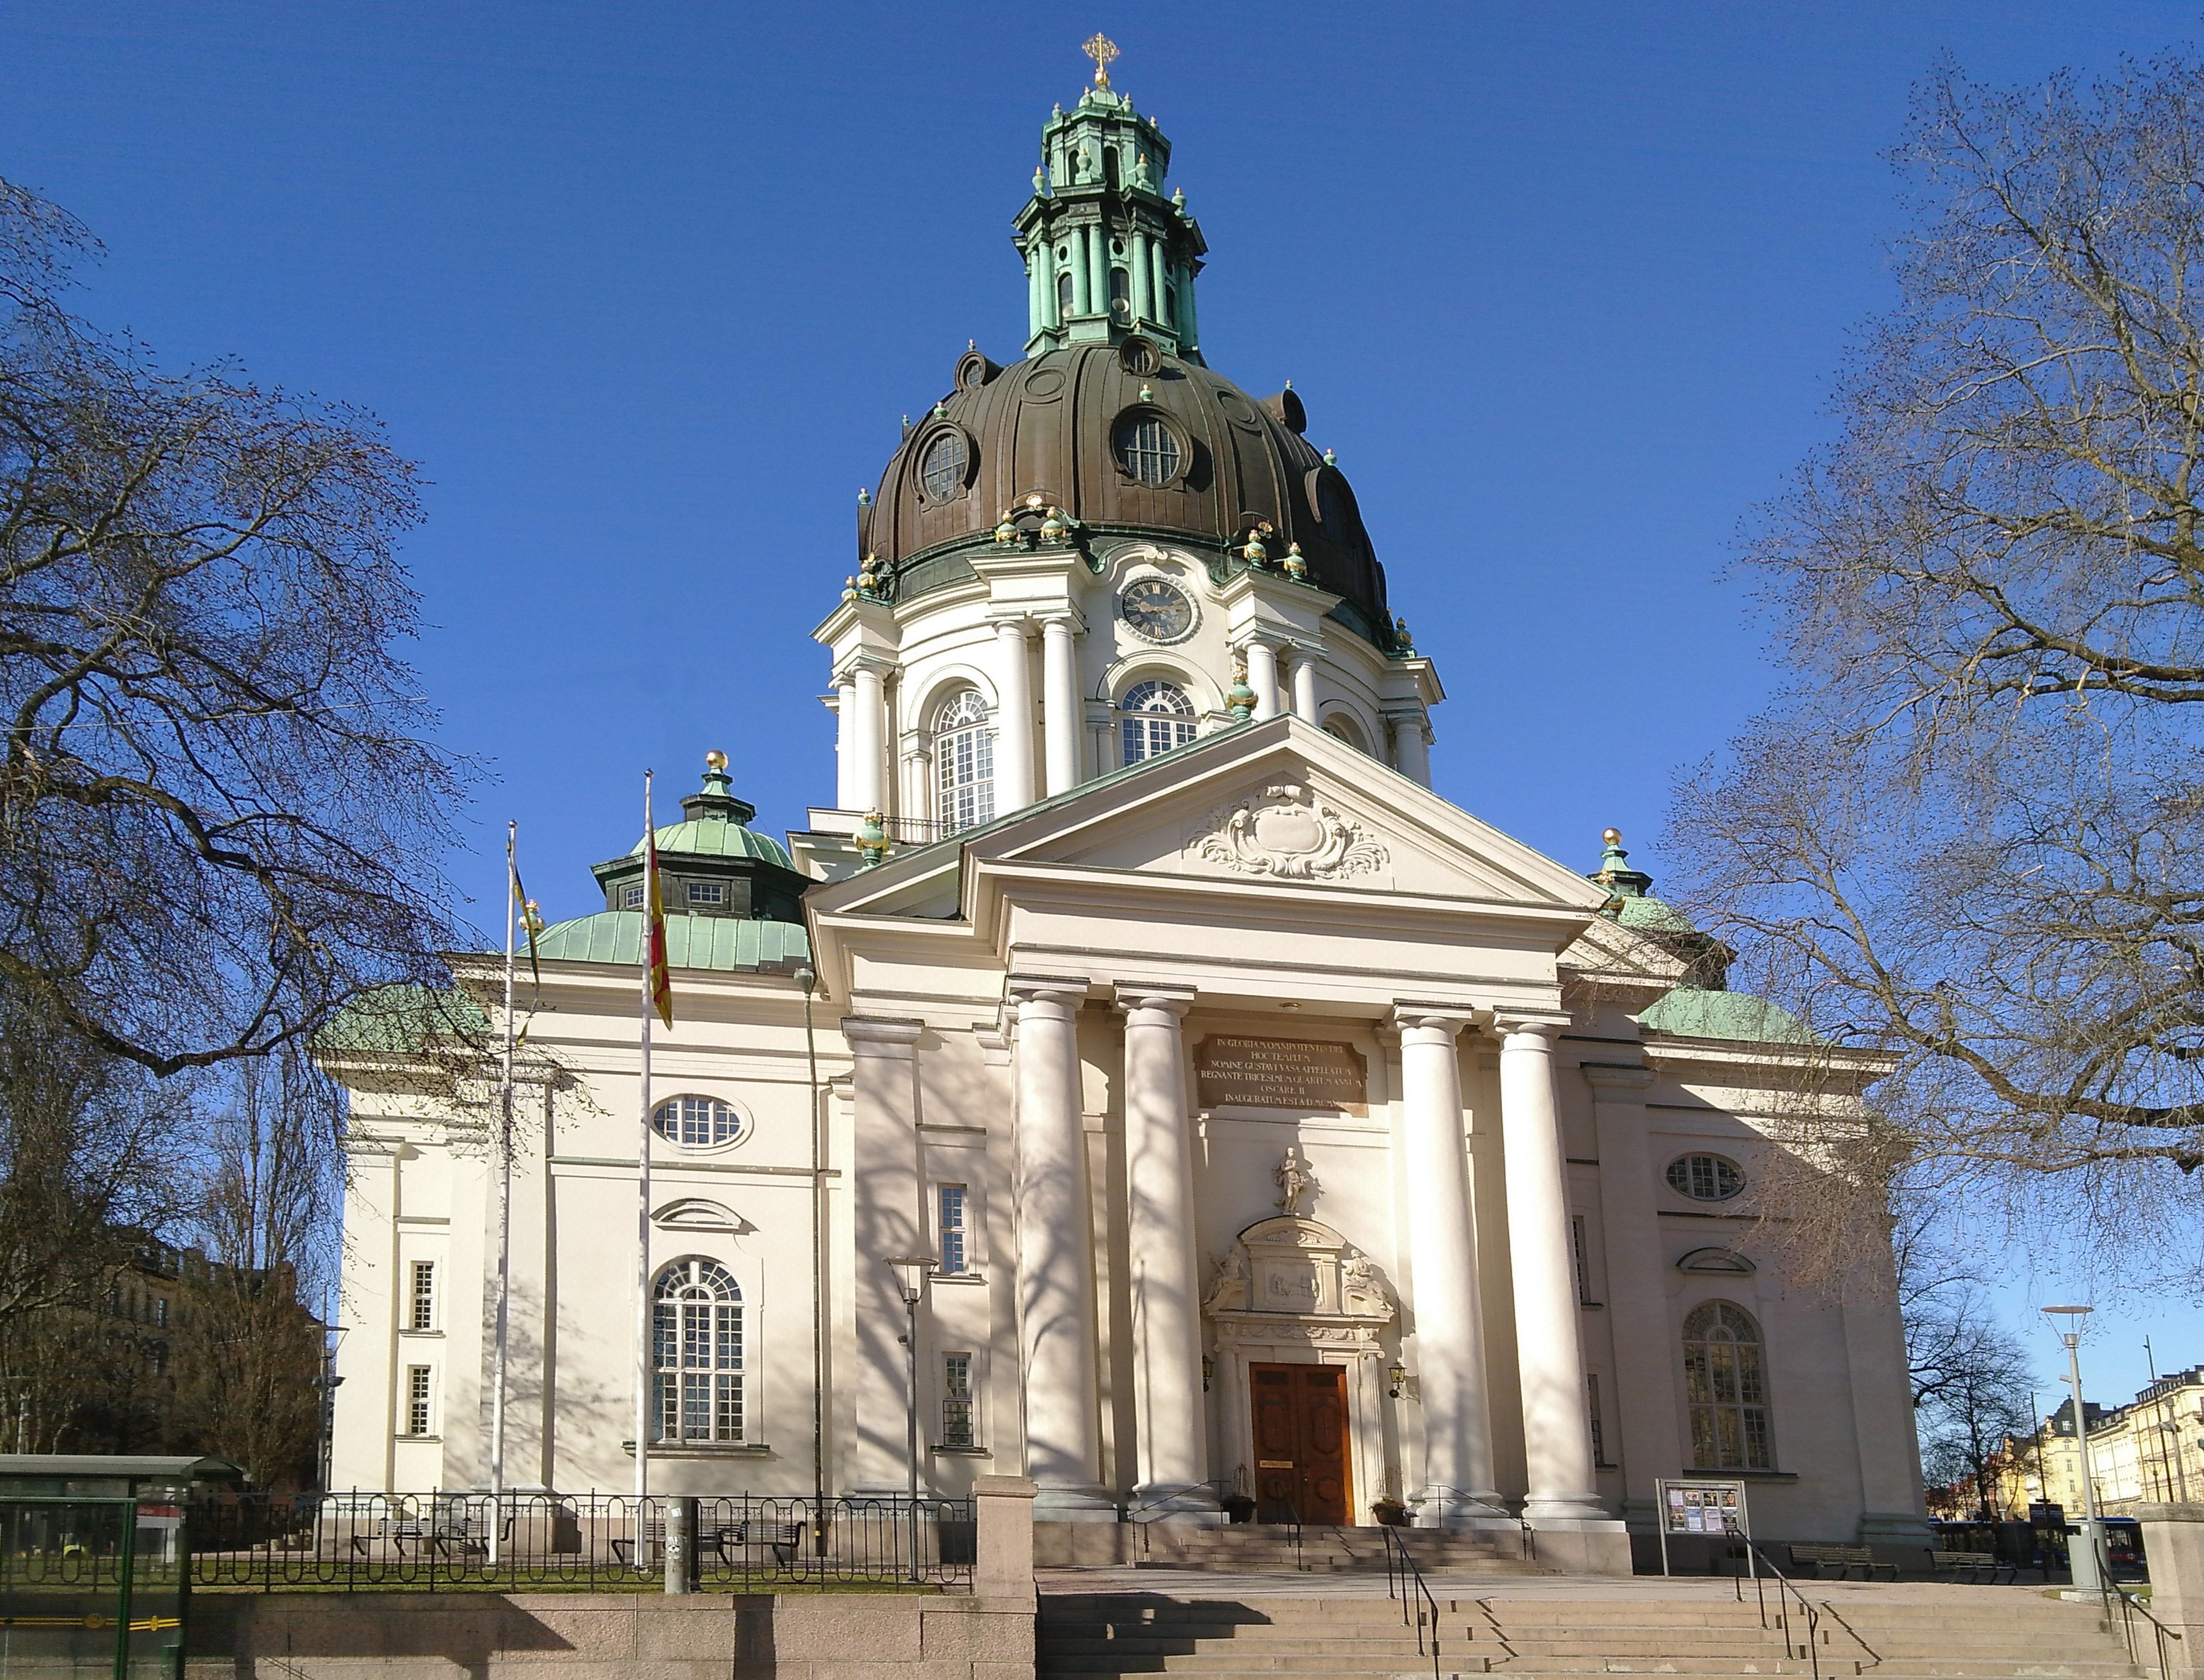 The Gustav Vasa church in Vasastan